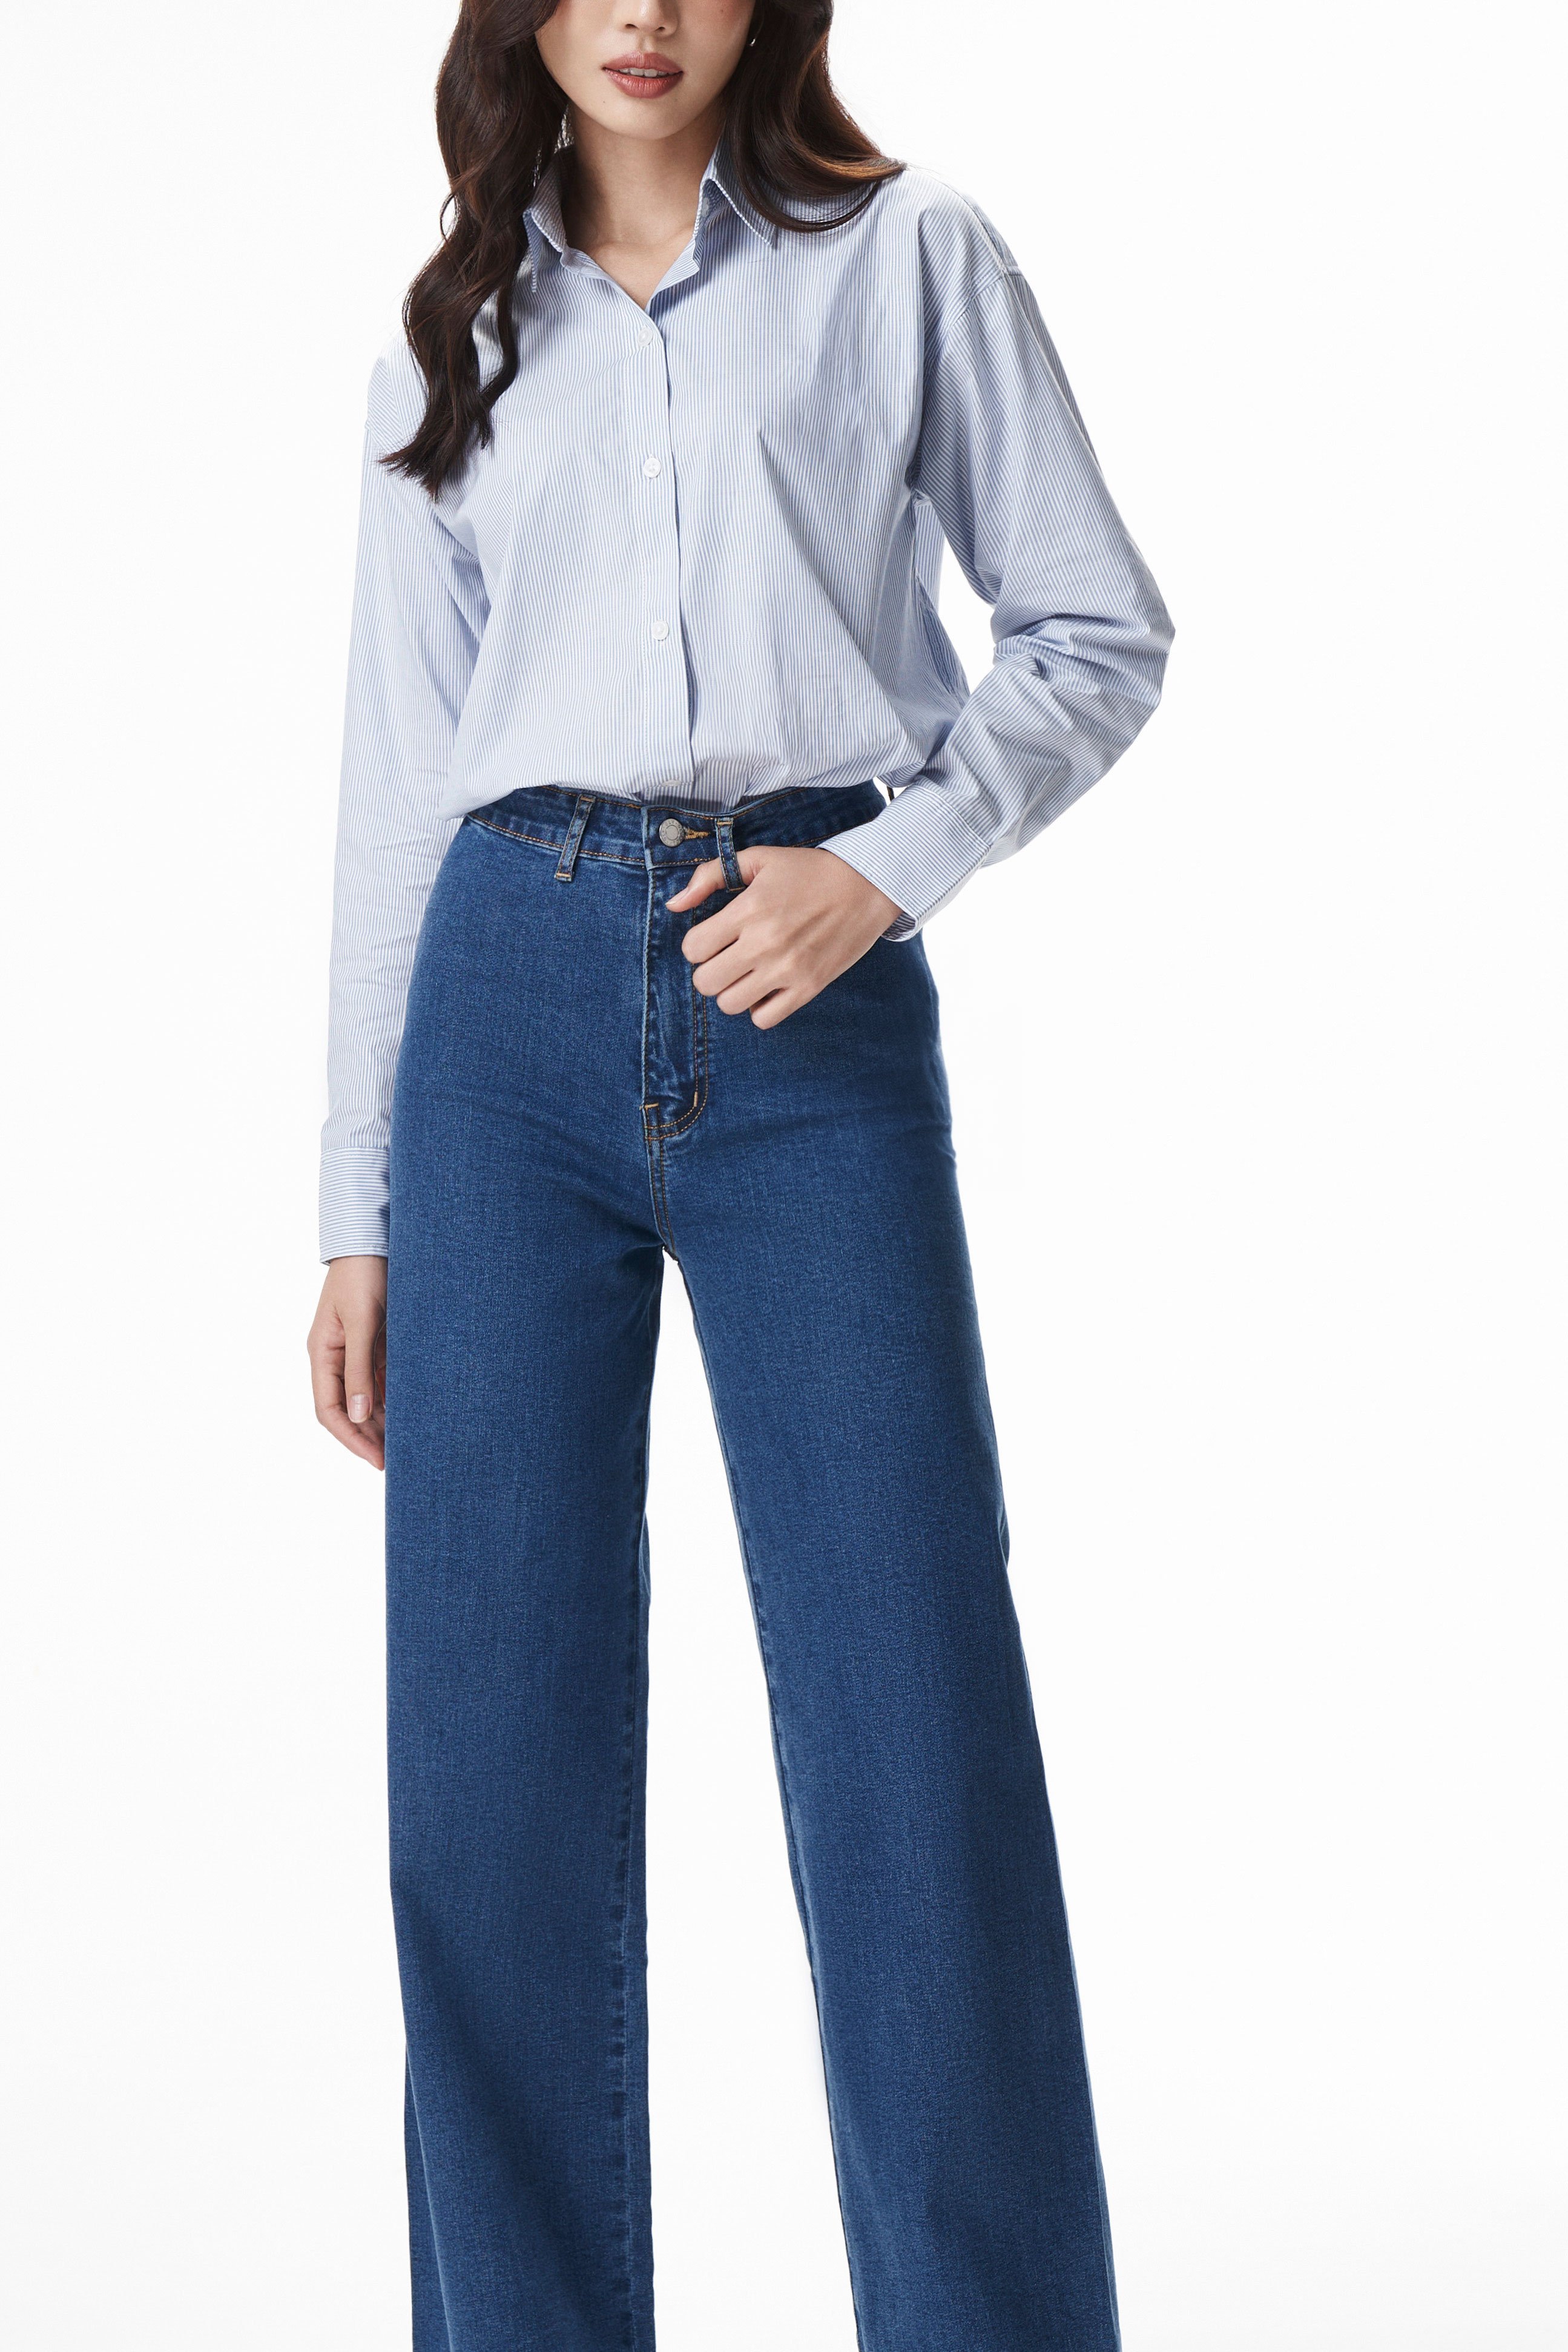 OLV - Quần Keyla Loose Jeans